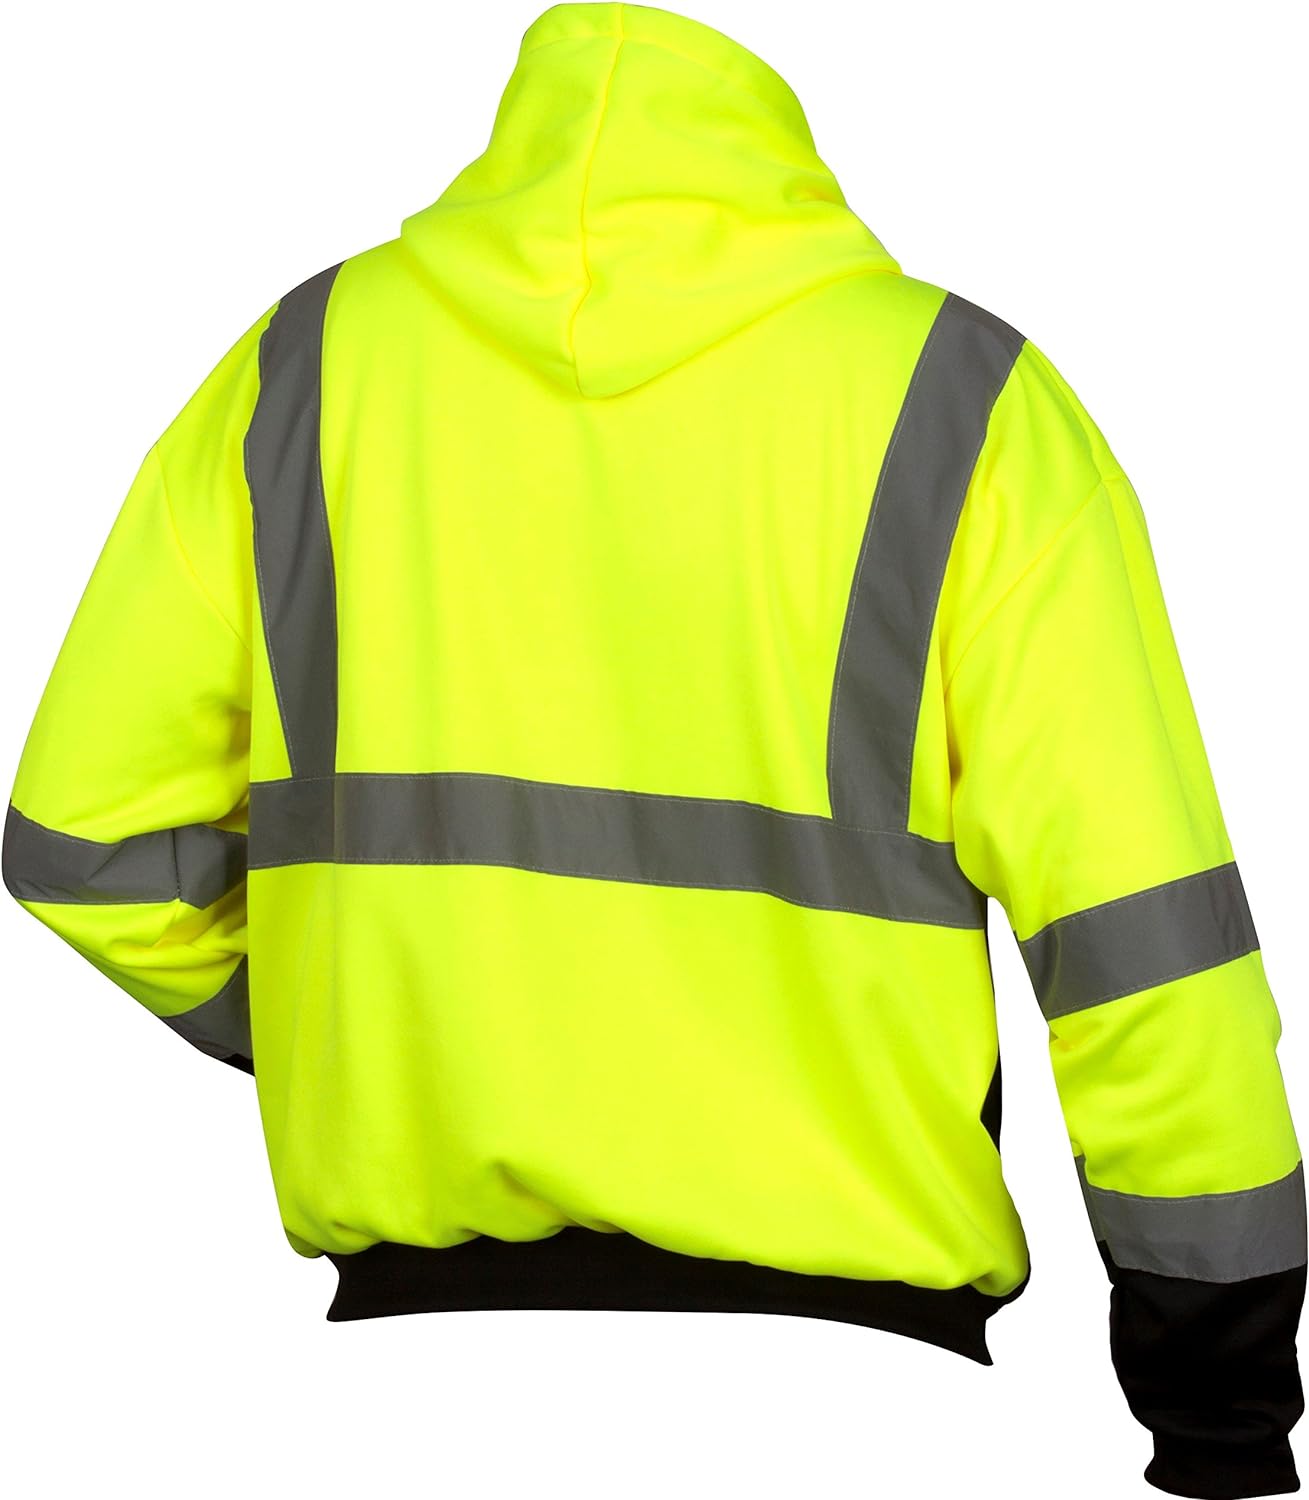 Pyramex Safety RSZH3210XL RSZH32 Series Sweatshirts Hi-Vis Lime Zipper Sweatshirt with Black Bottom- Size Extra Large, Green